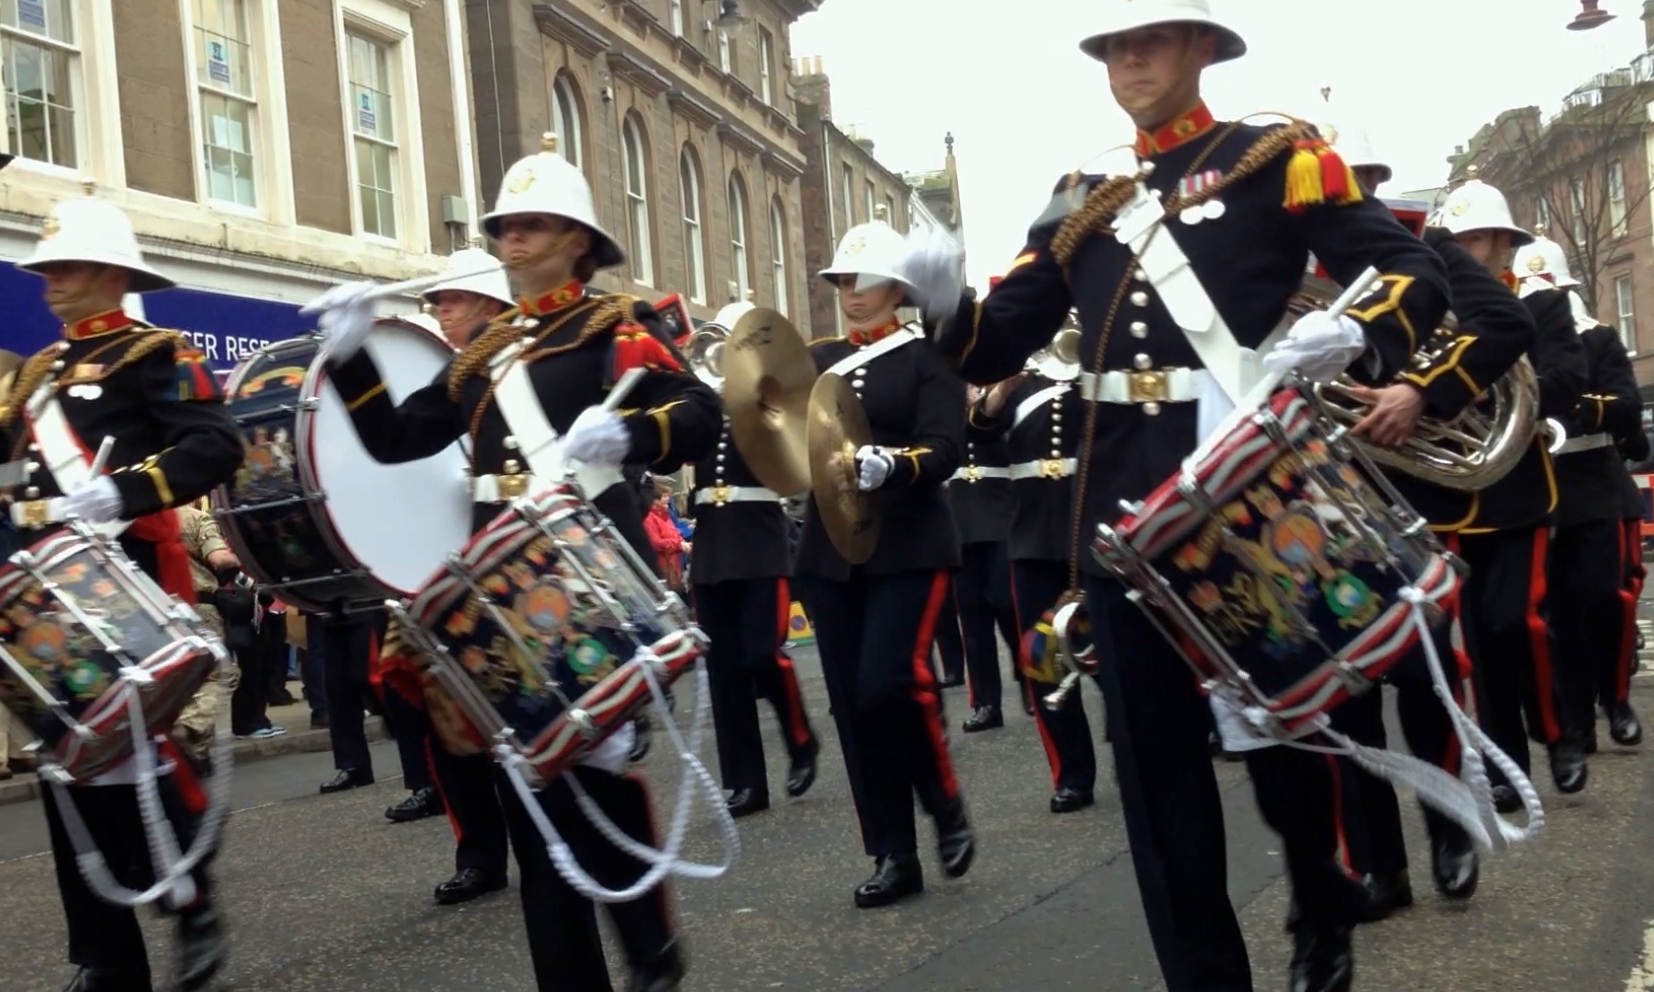 The marines parade through the High Street.